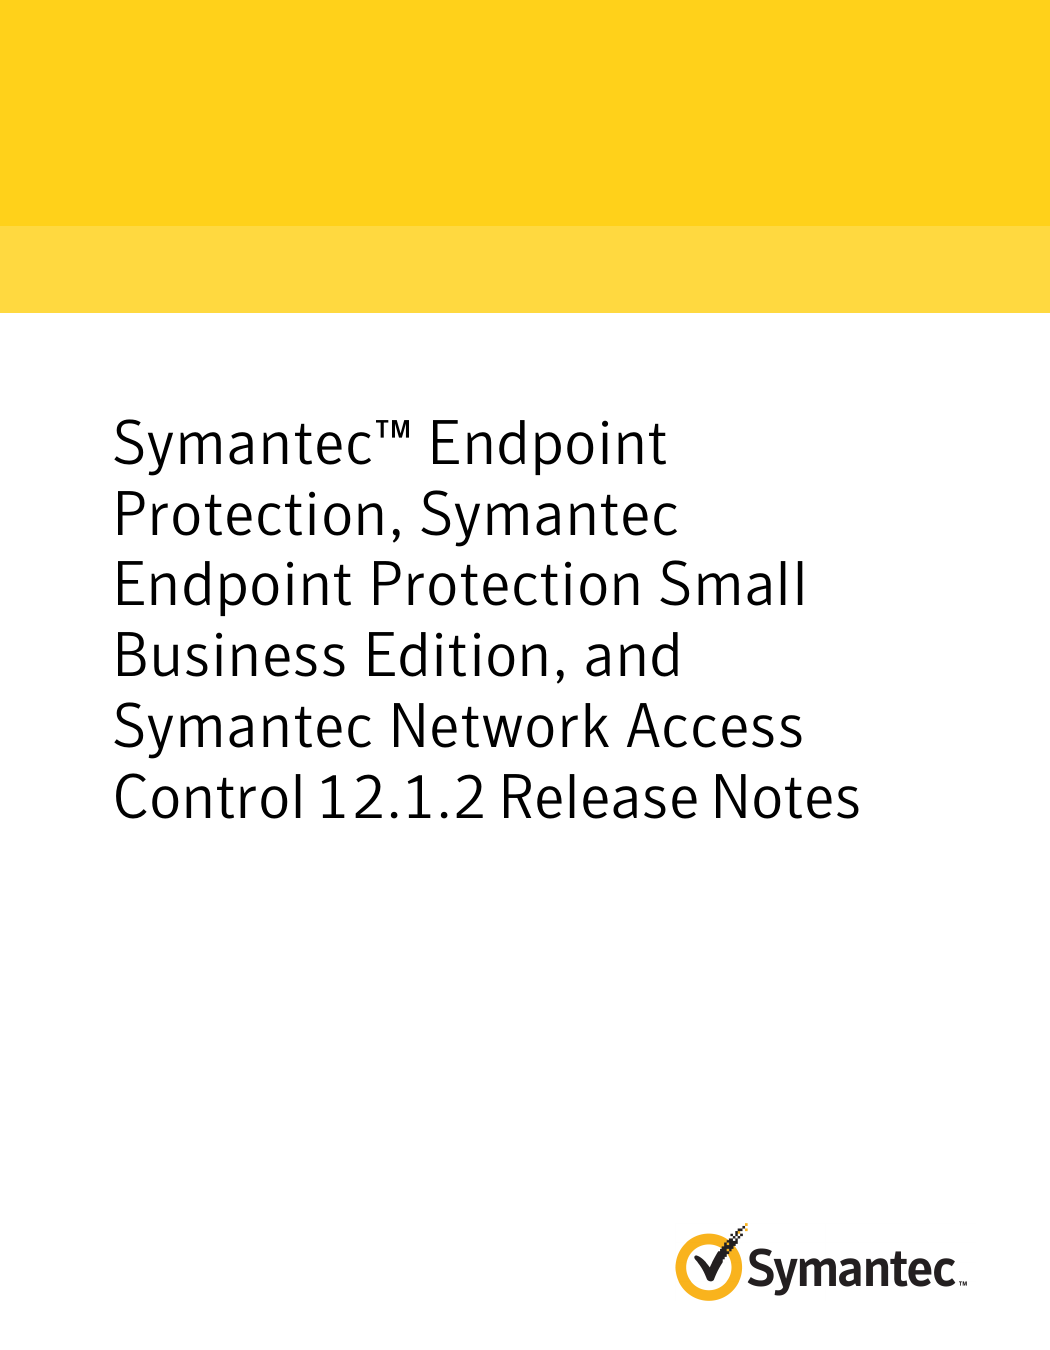 uninstall symantec endpoint protection mac manually